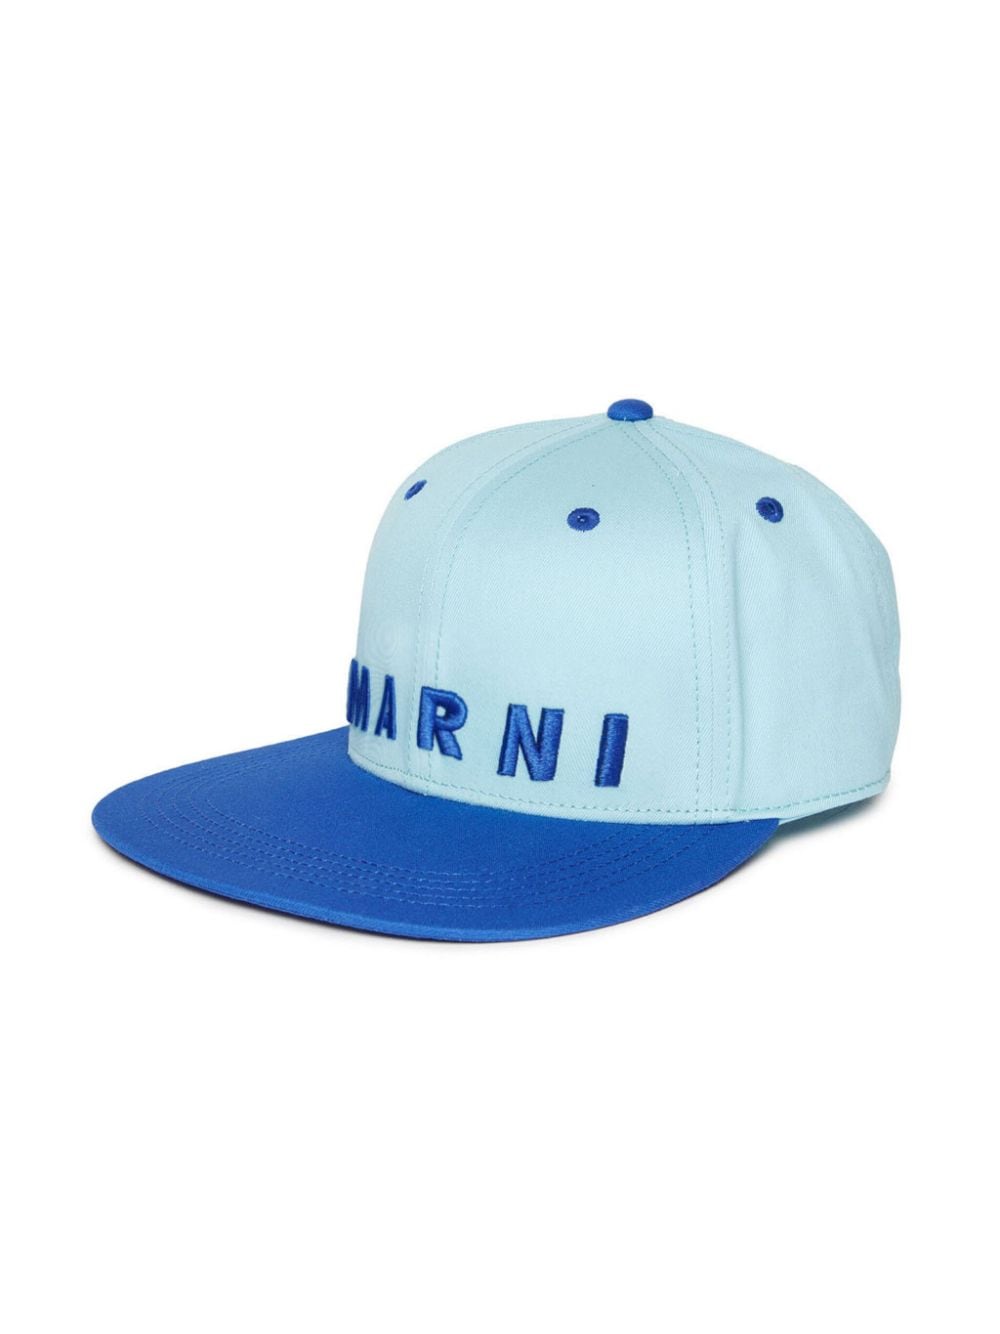 Marni Kids logo-embroidered cotton cap - Blue von Marni Kids